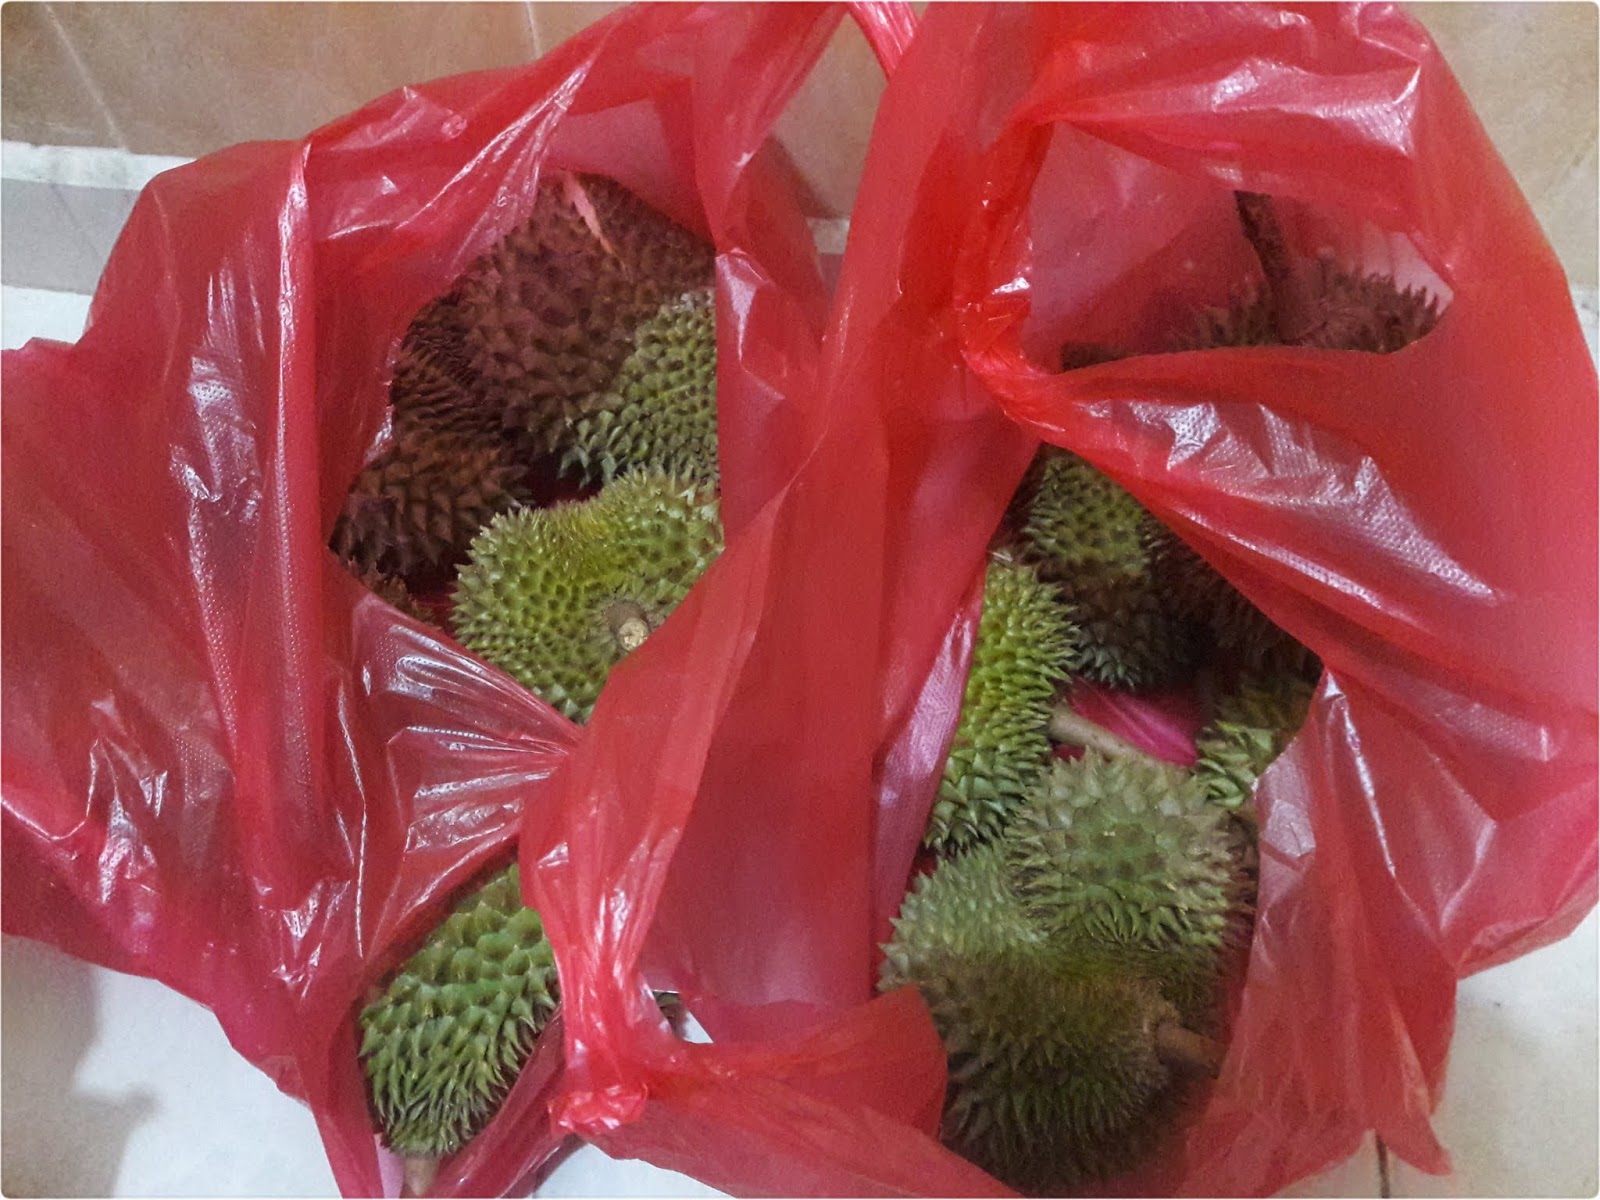 Resepi jem durian